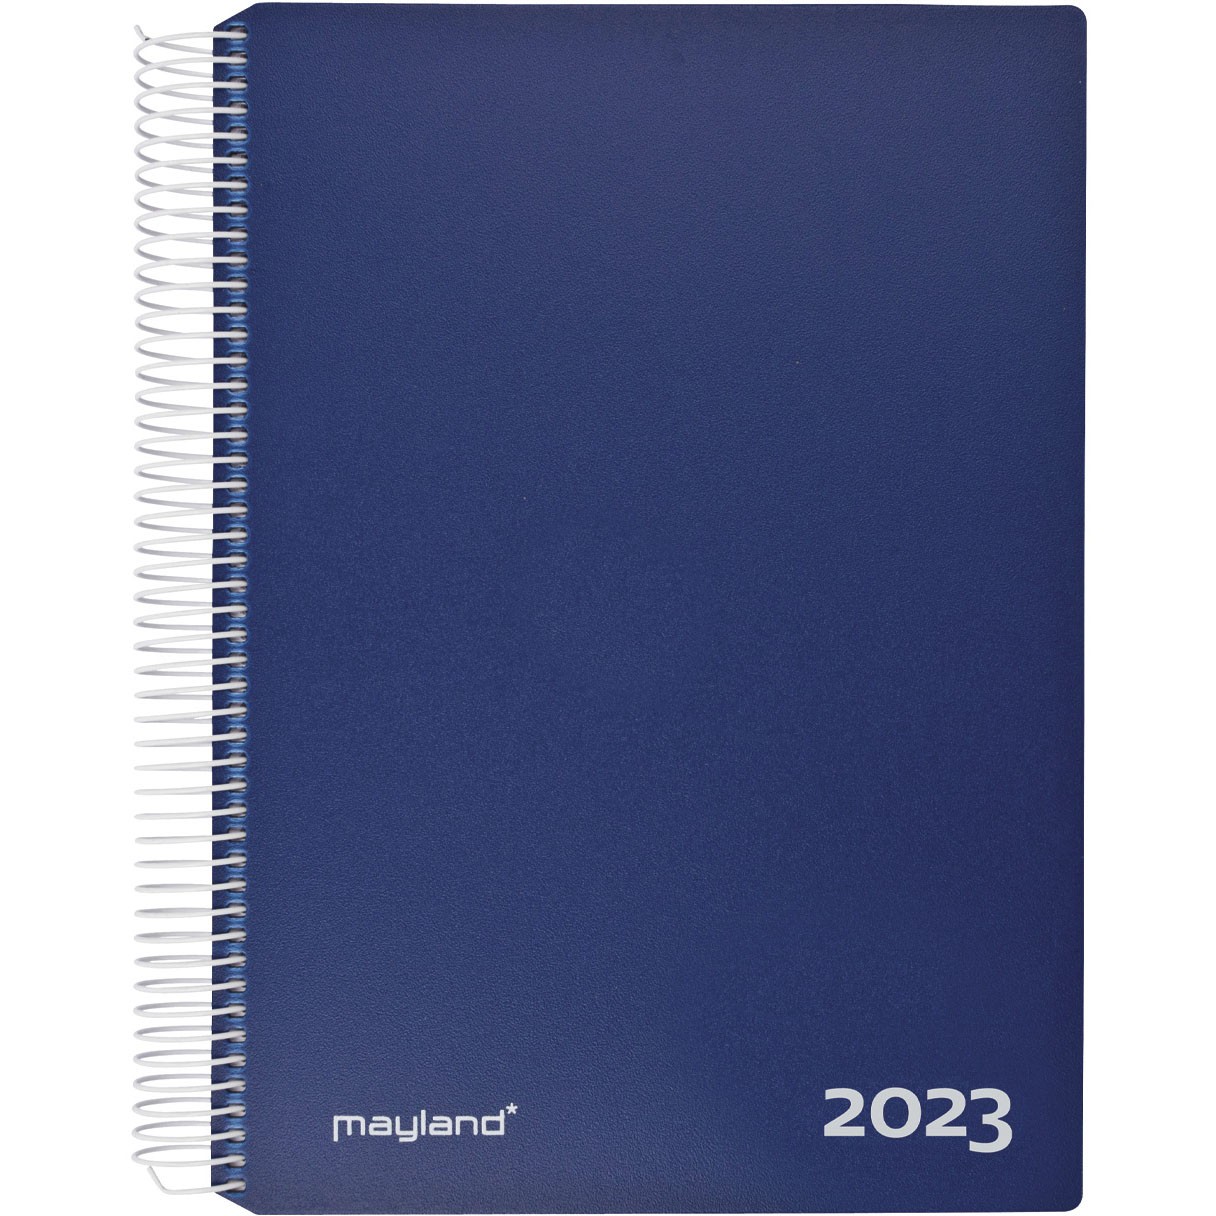 Mayland 2023 23218020 timekalender 24x18,5cm blå